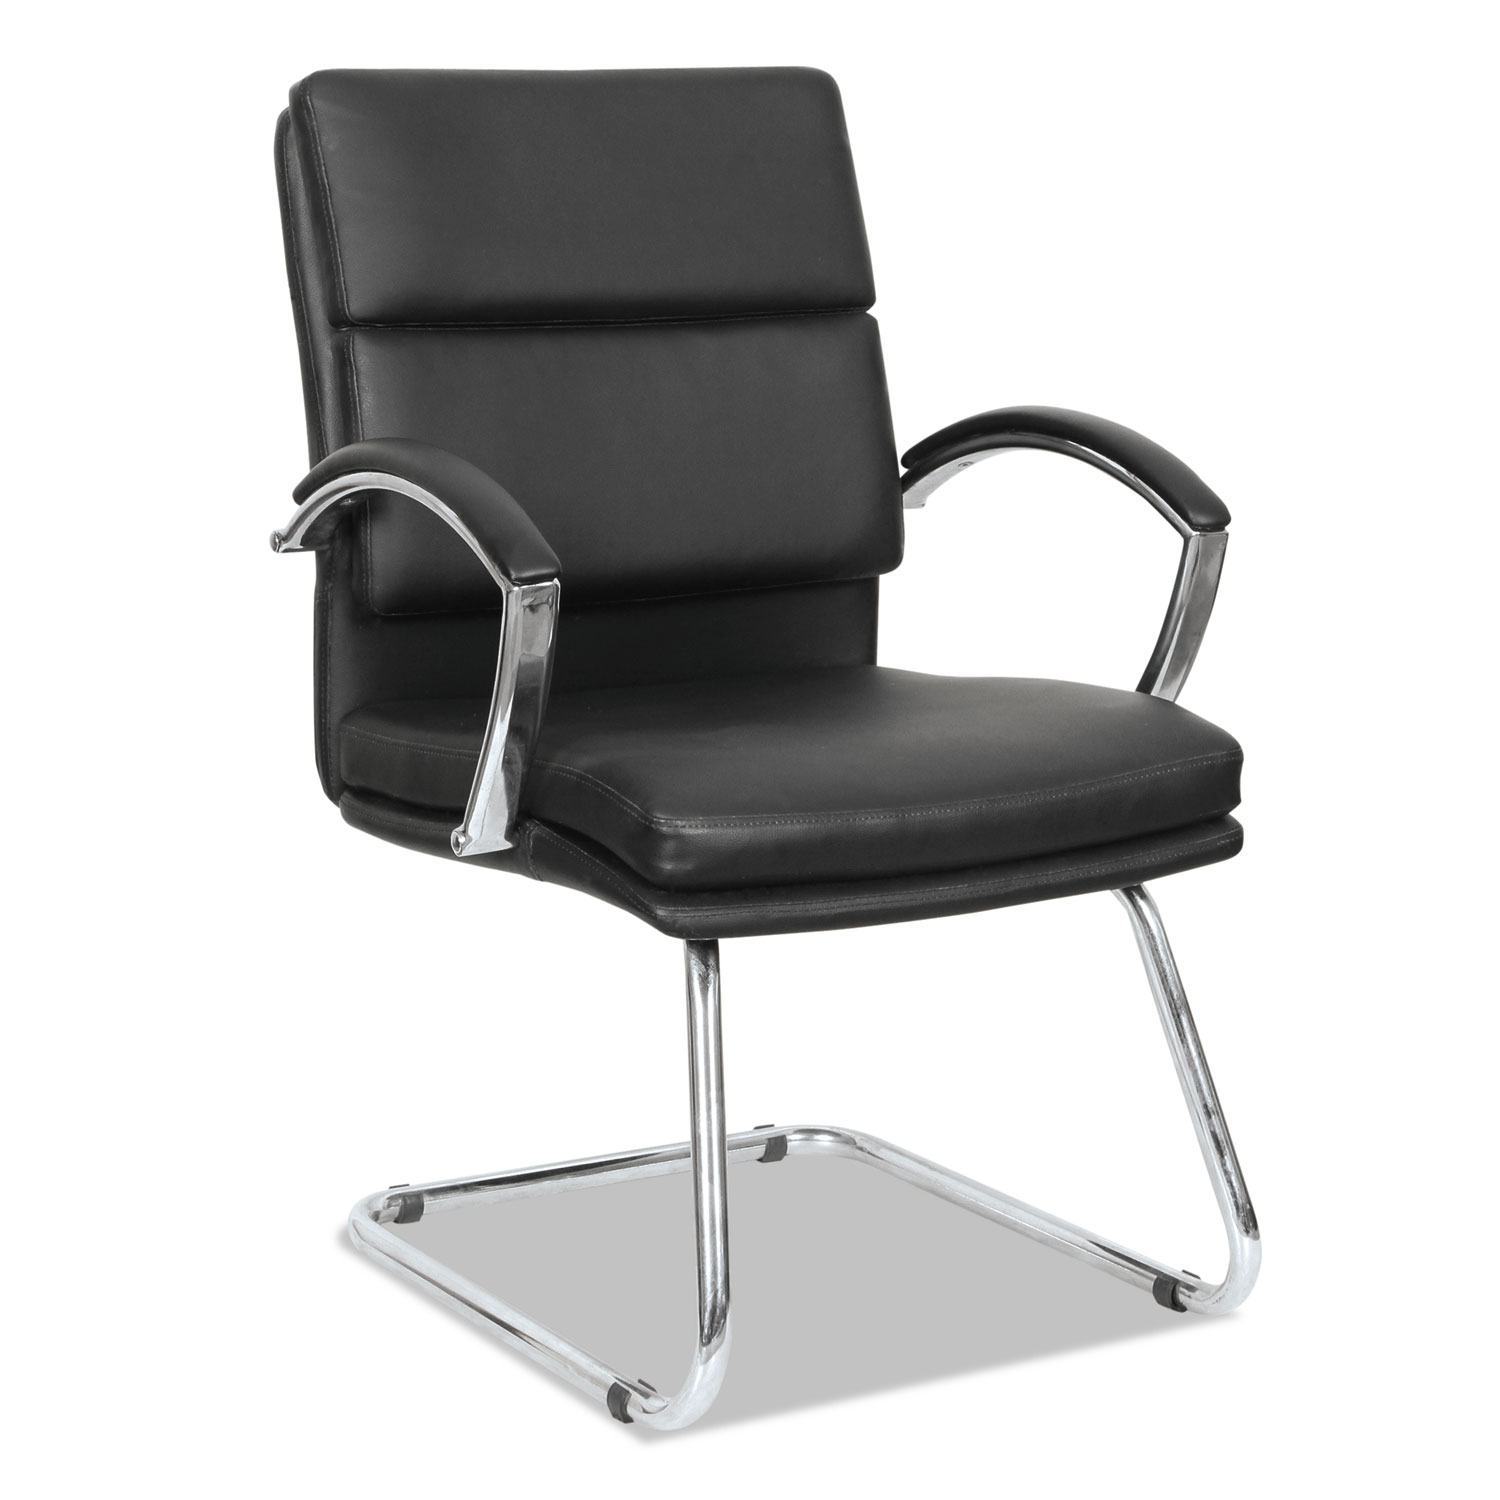  Alera ALENR4319 Alera Neratoli Slim Profile Guest Chair, 23.81'' x 27.16'' x 36.61'', Black Seat/Black Back, Chrome Base (ALENR4319) 